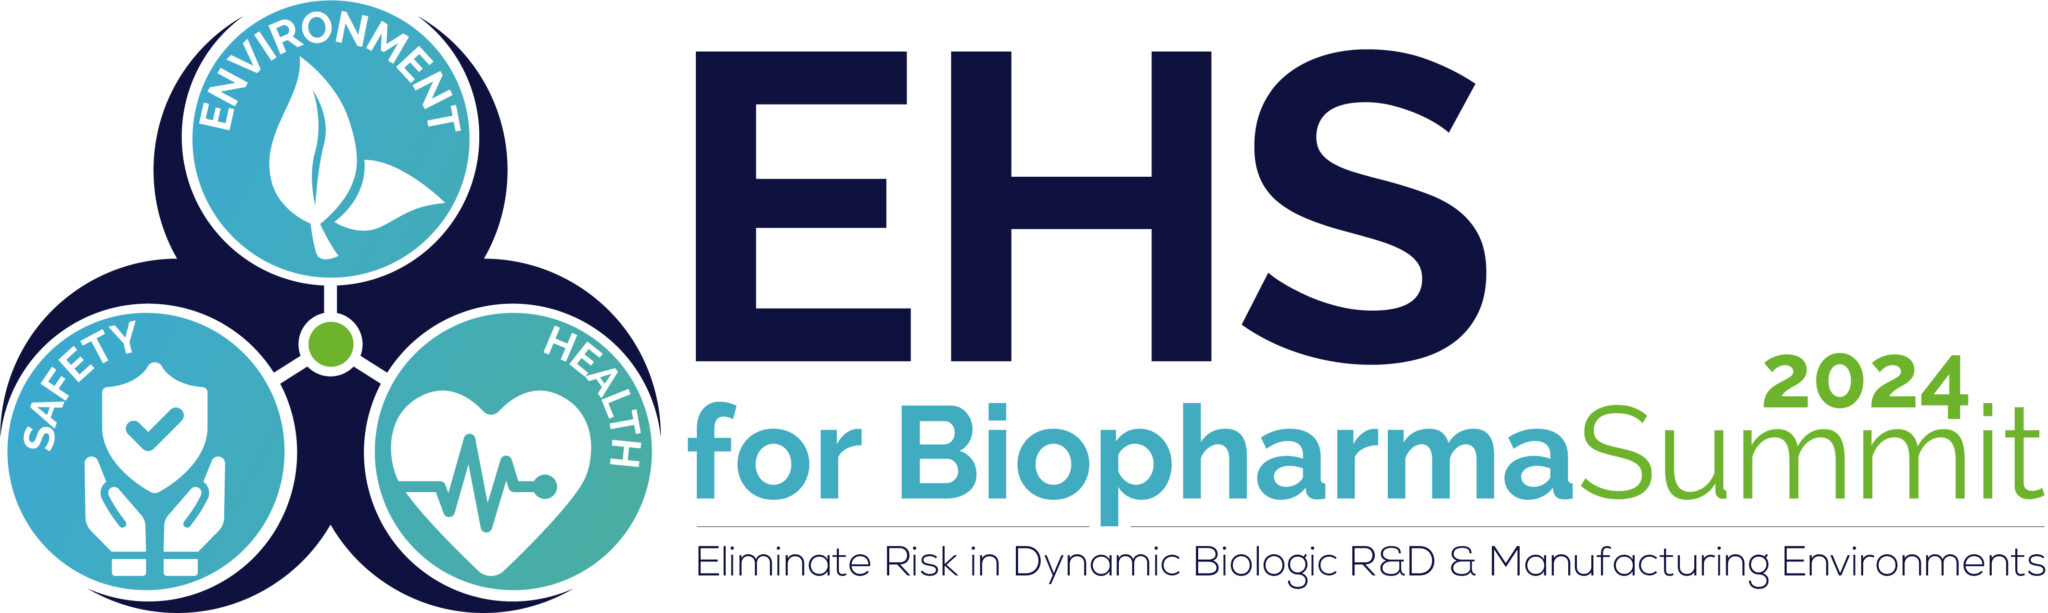 HW230825-49618-EHS-for-Biopharma-logo-FINAL-2048x613